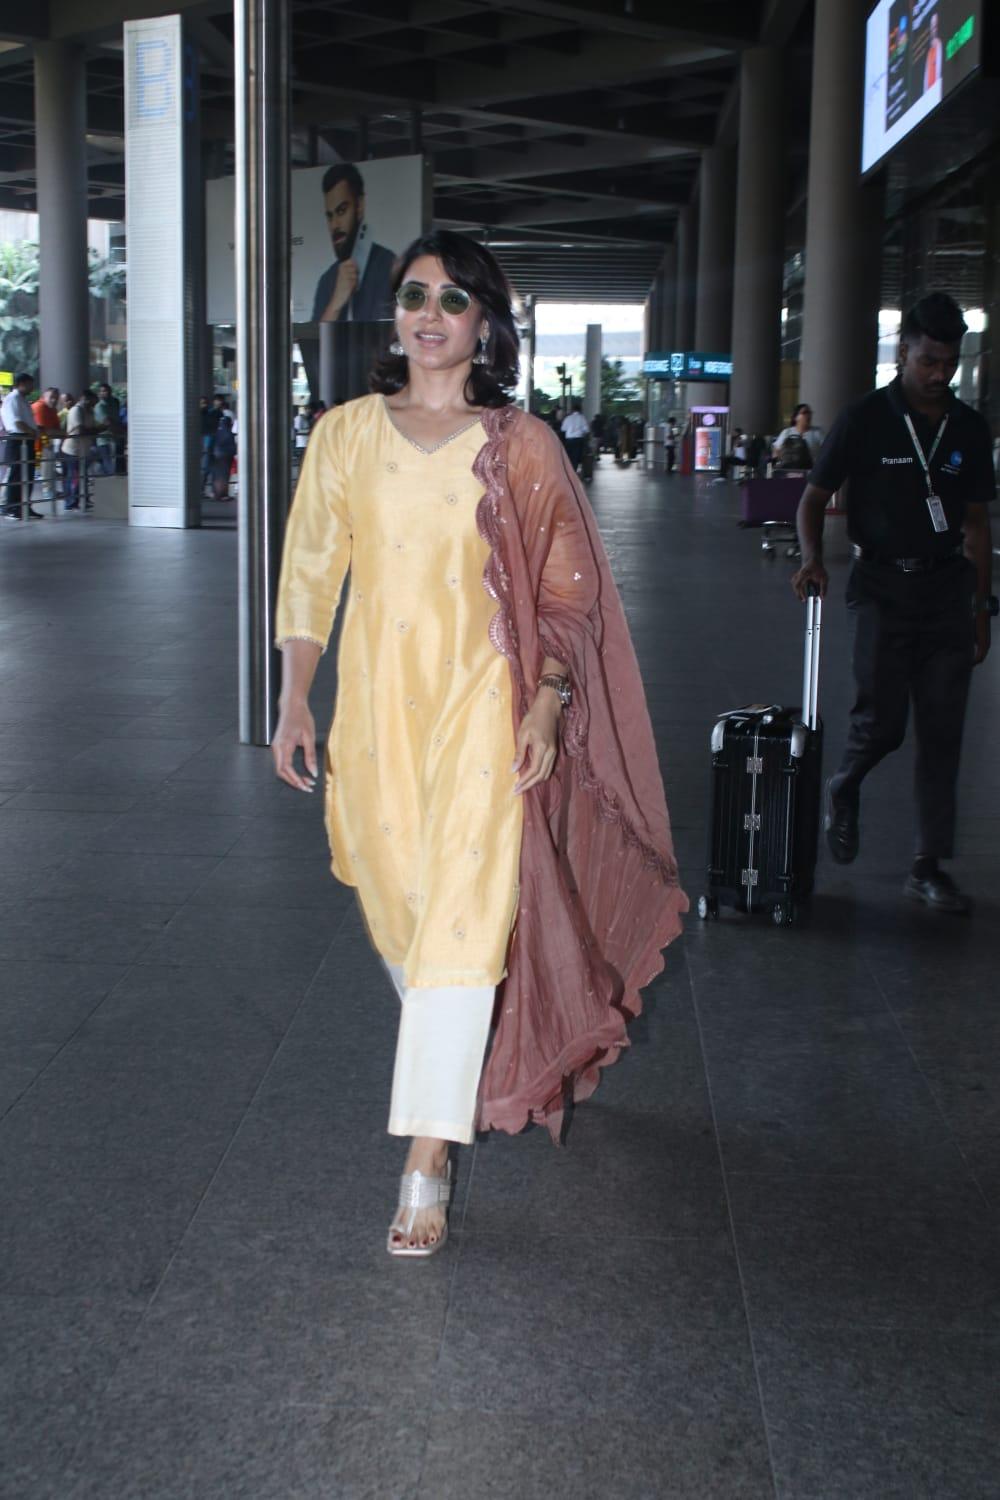 Samantha Ruth Prabhu was clicked in the city wearing a yellow kurta and white palazzo 